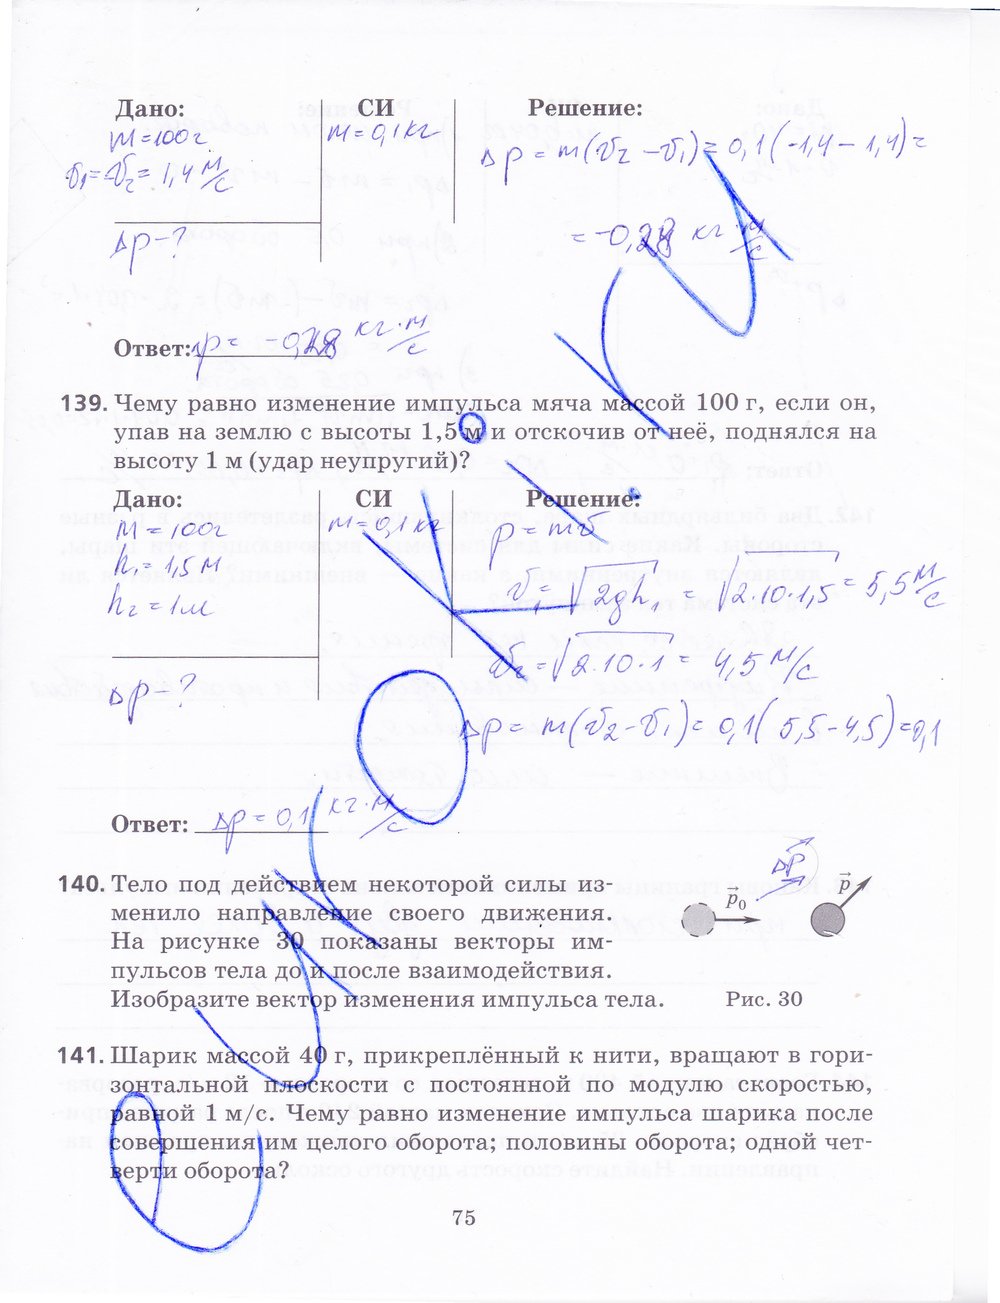 ГДЗ Физика Пурышева 9 класс Рабочая тетрадь Номер стр. 75